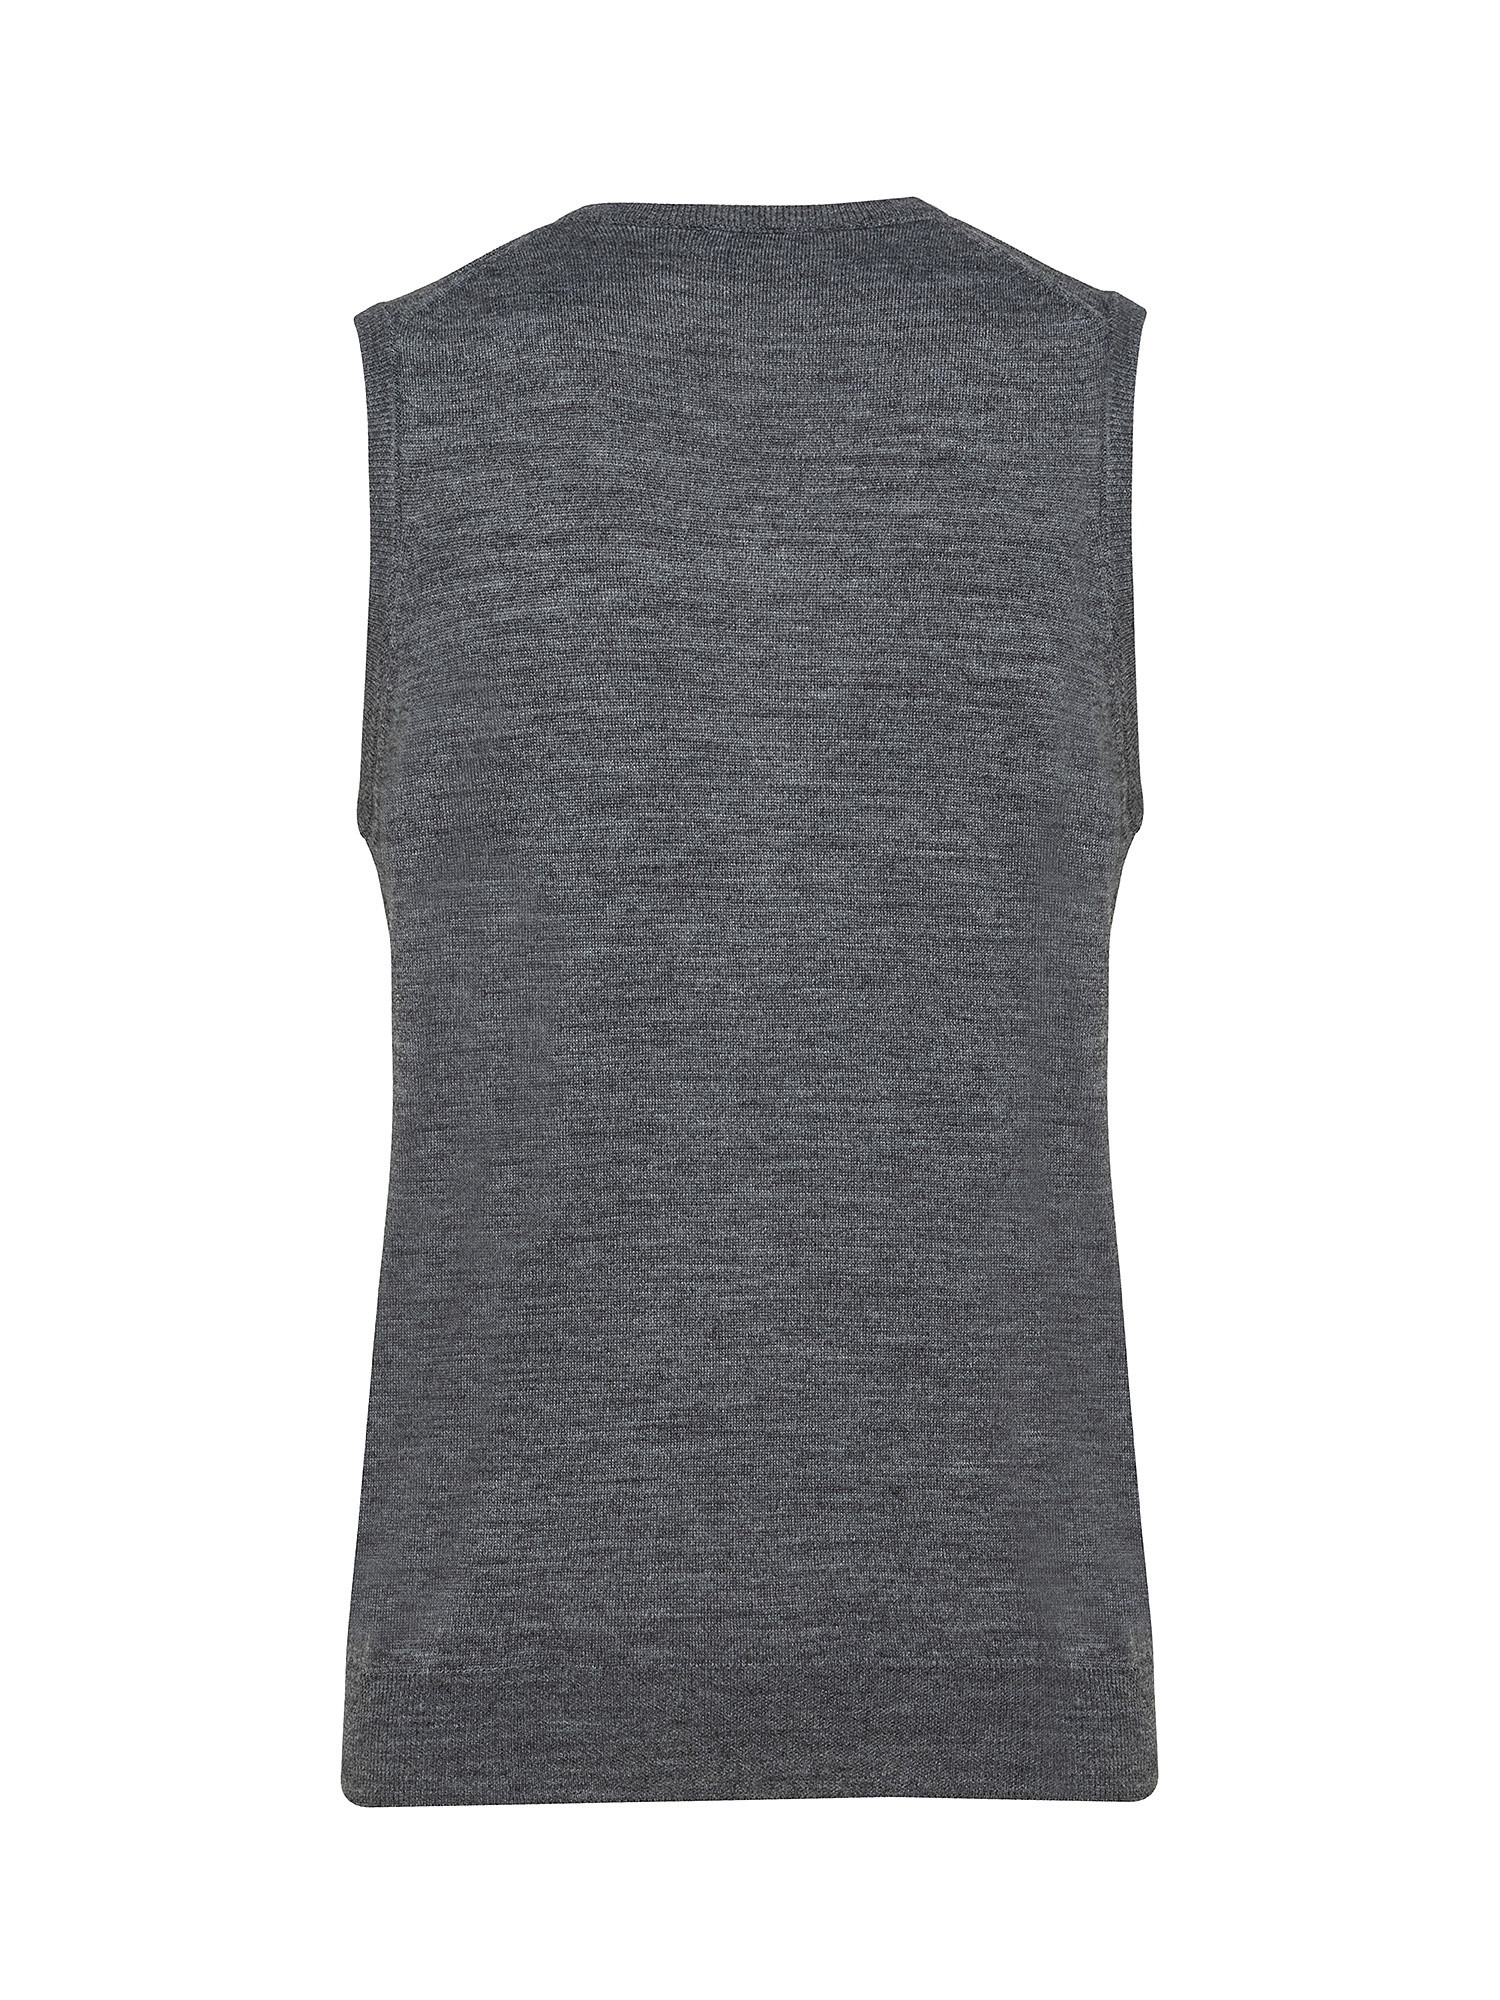 Merino Blend Vest - Machine washable, Grey, large image number 1